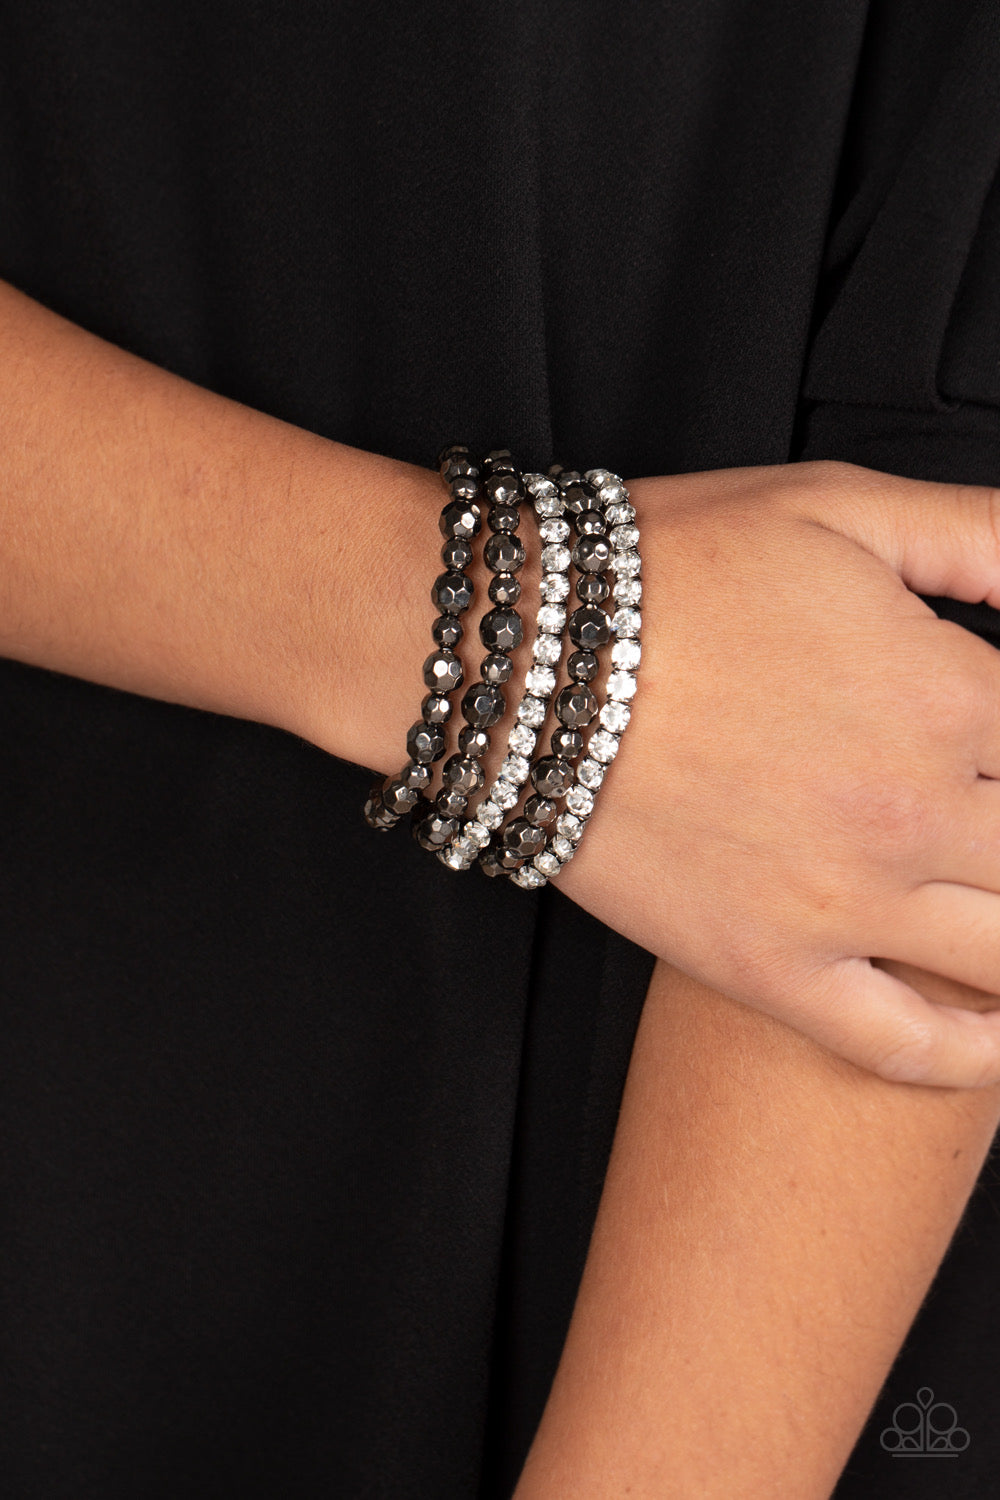 Stretchy Bracelets - Paparazzi Top Notch Twinkle - Black Bracelets Paparazzi jewelry image